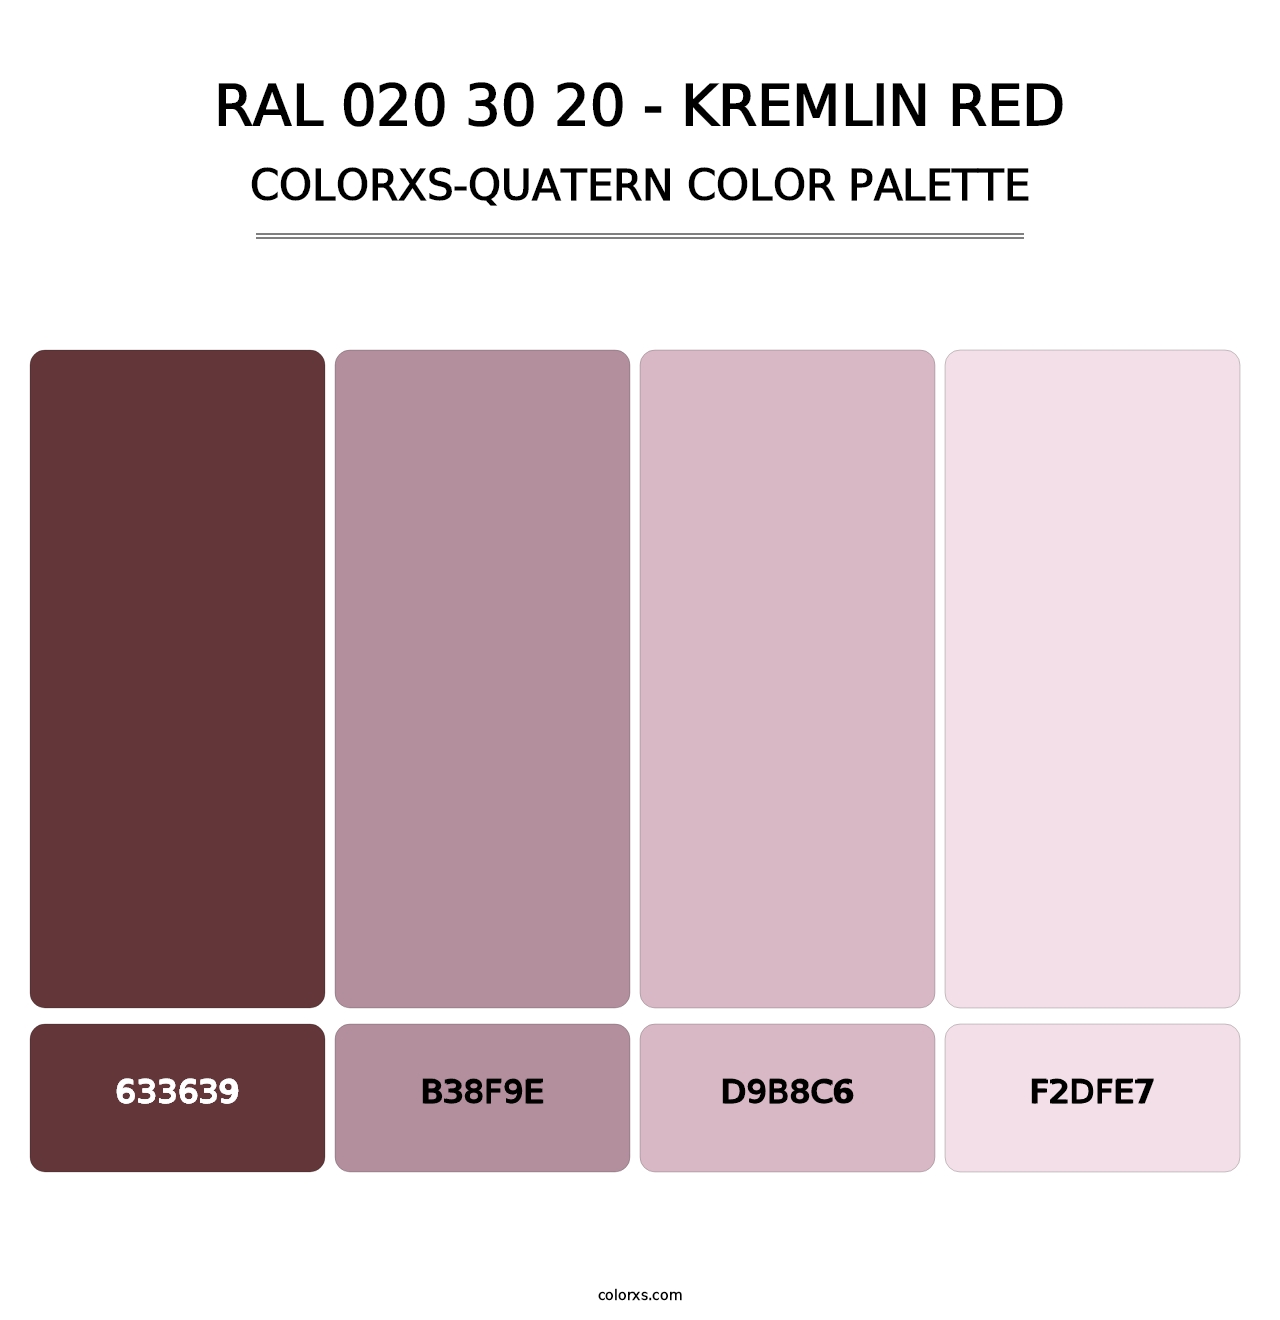 RAL 020 30 20 - Kremlin Red - Colorxs Quatern Palette